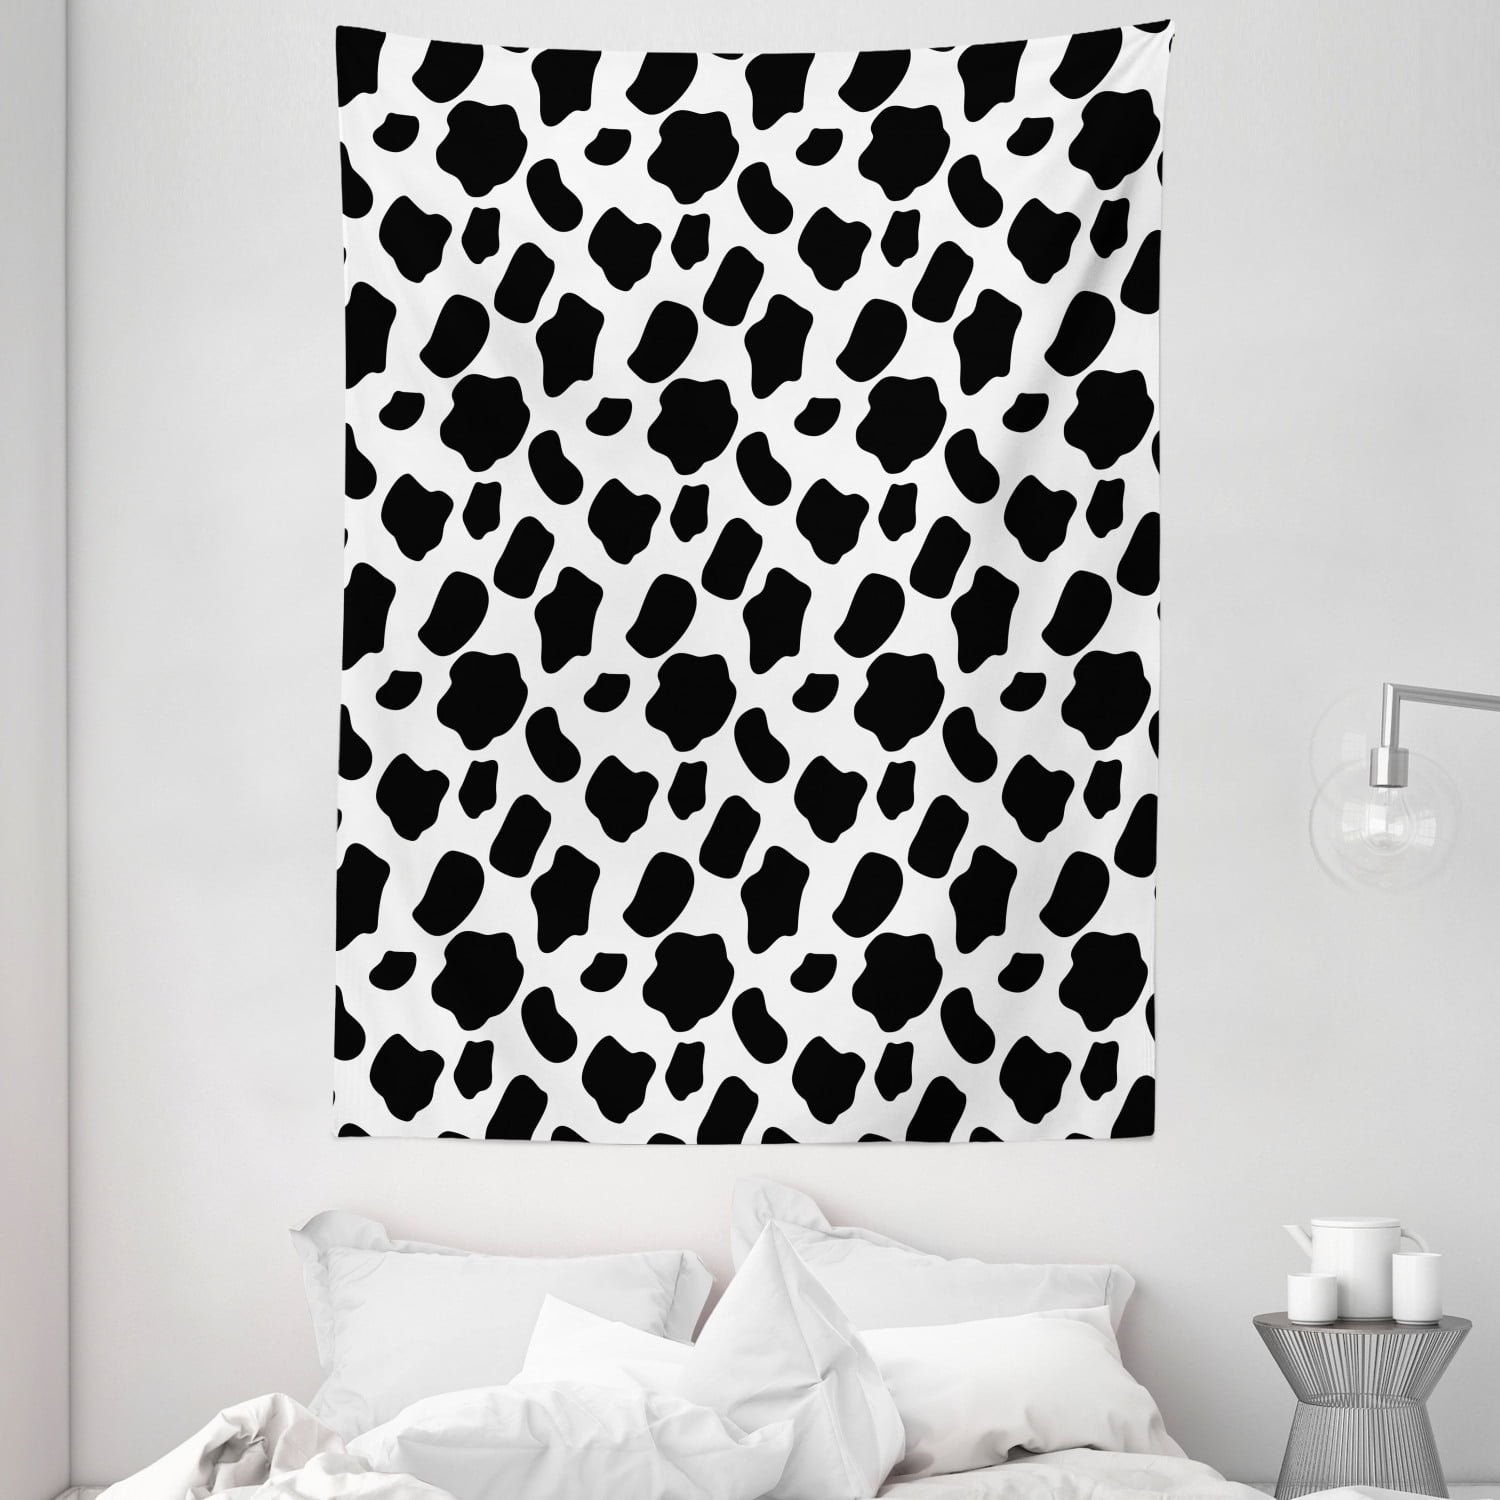 Cow Print Bedroom Decor Poland, SAVE 39%